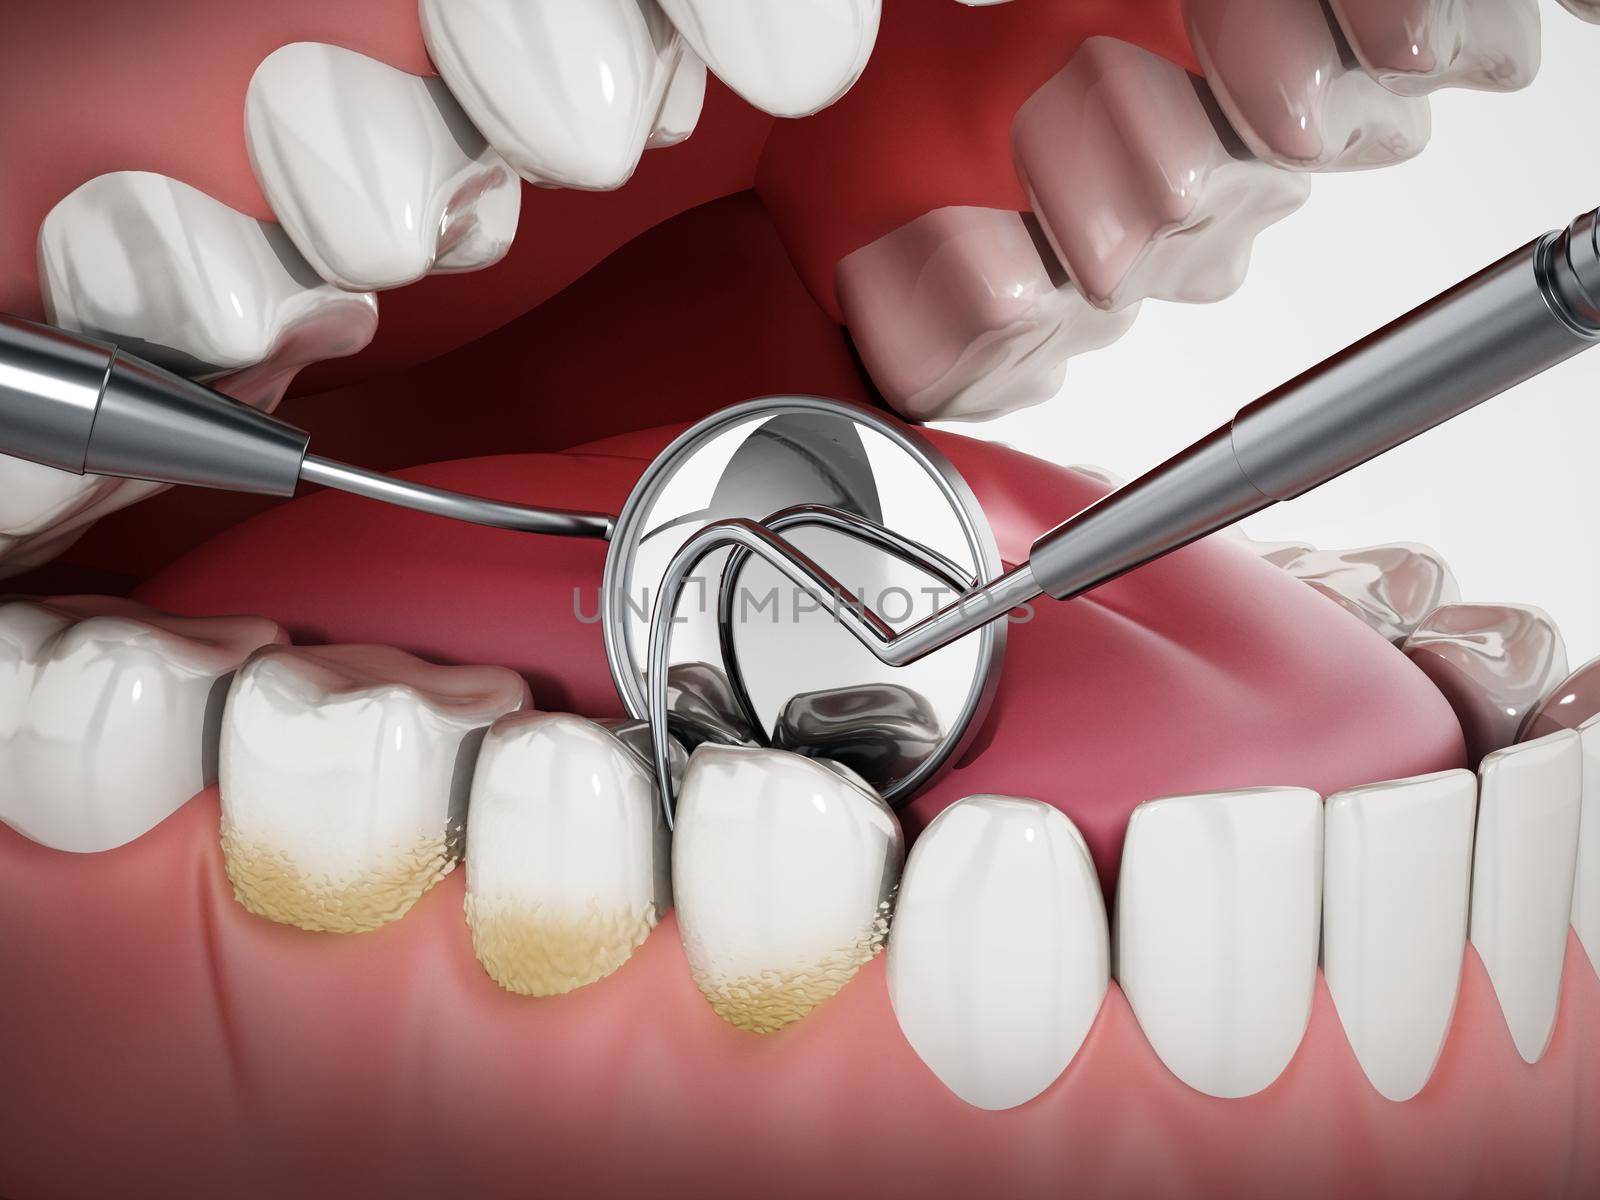 3D illustration showing dentist tools and dental plaque on model. 3D illustration by Simsek